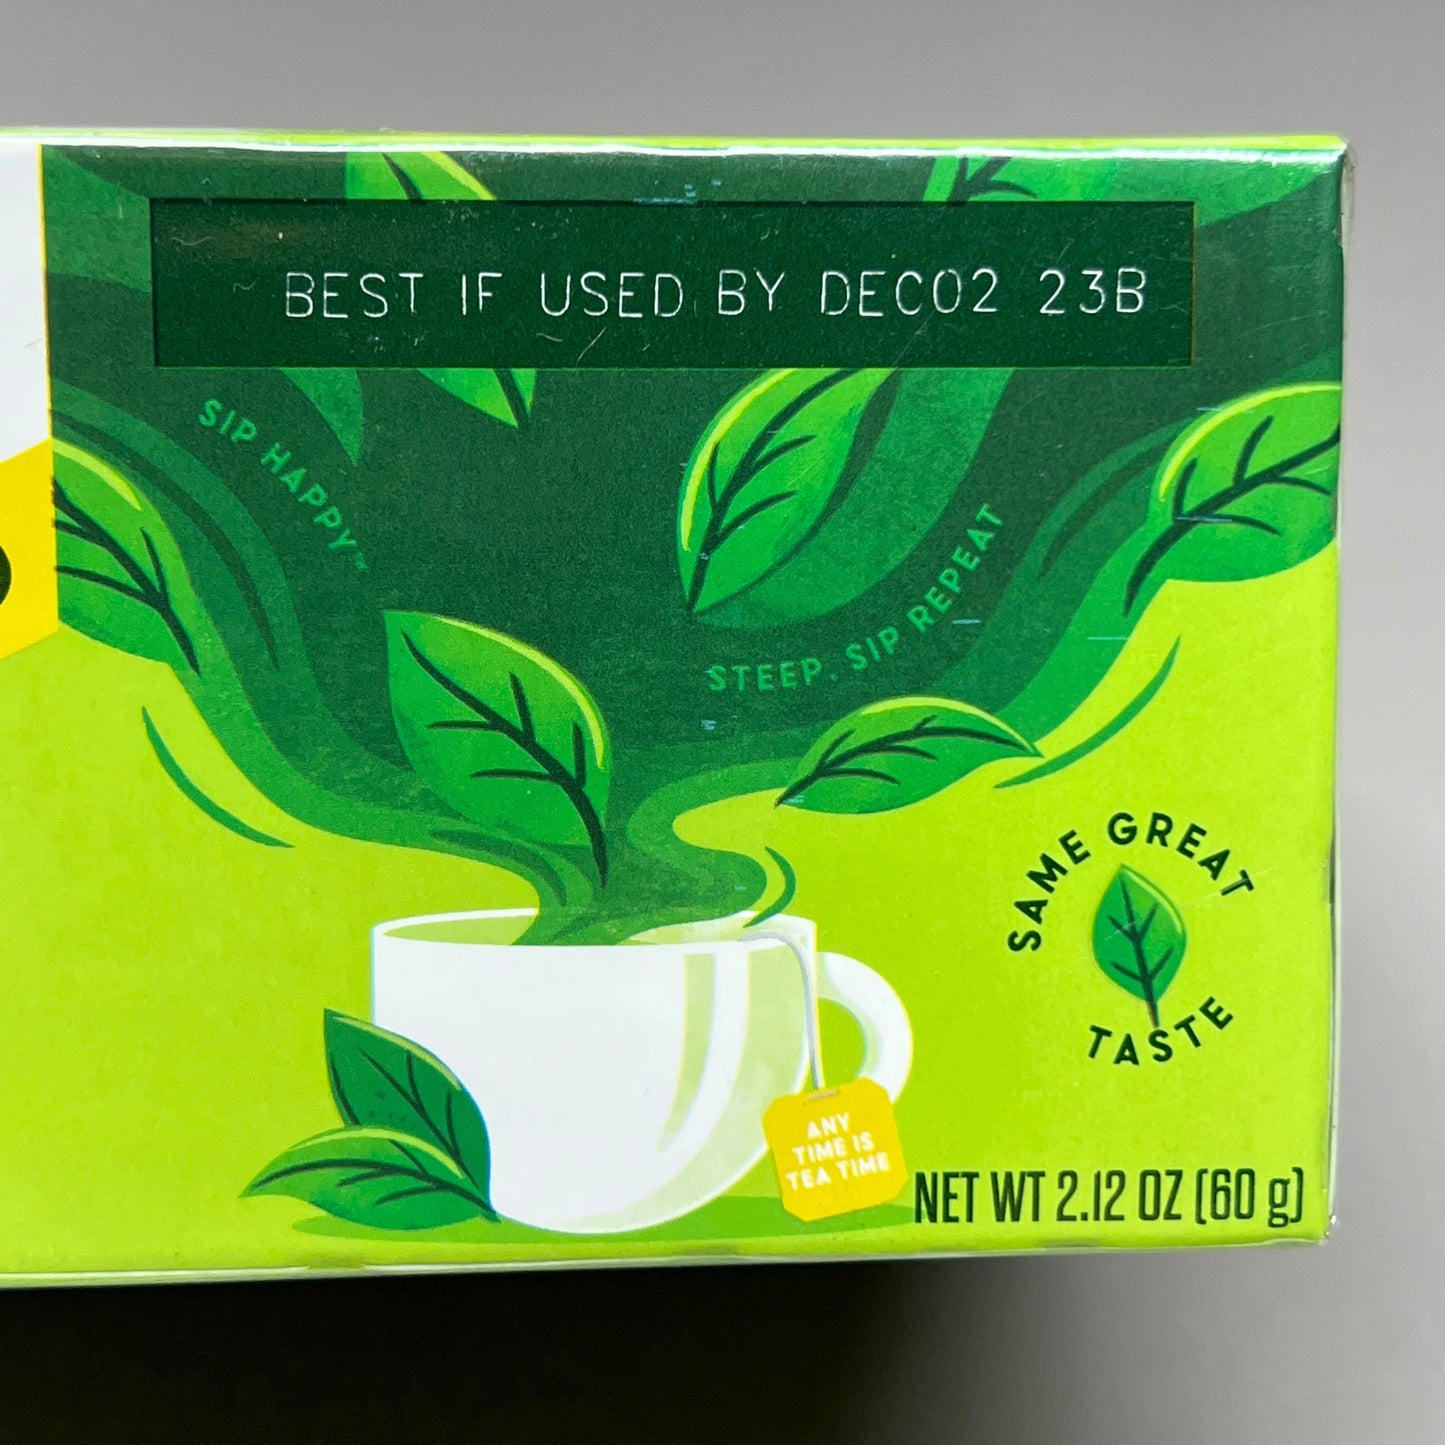 ZA@ SALADA 2PK! Decaffeinated Classic Green Tea 40 Count Bags BB Dec 2023 (AS-IS) A